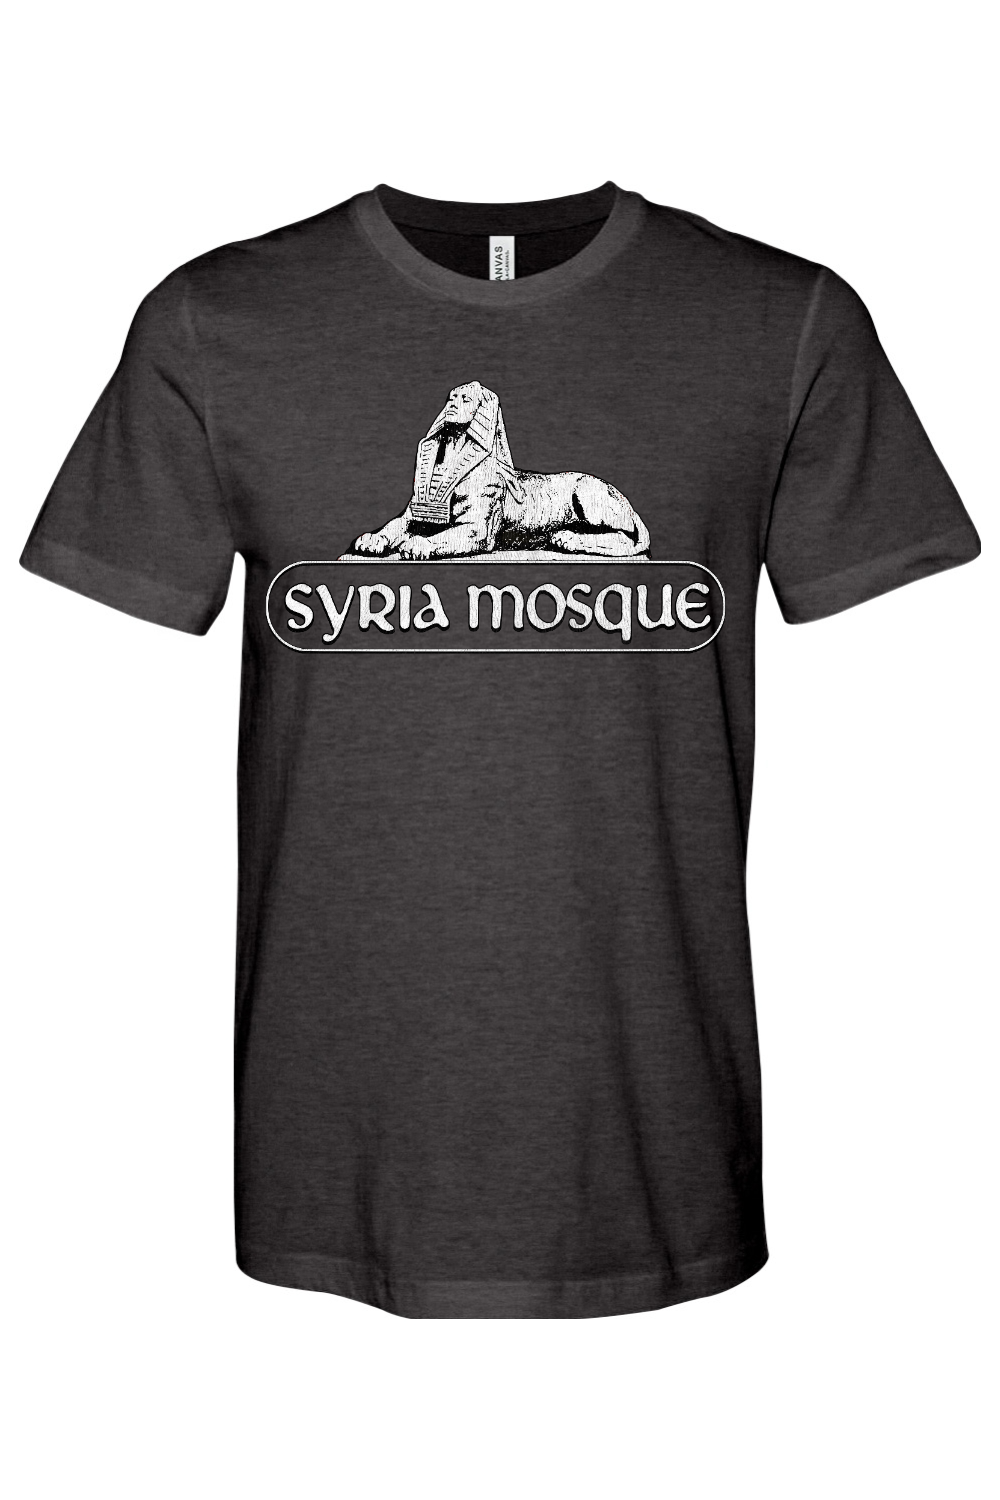 Syria Mosque - Bella + Canvas Heathered Jersey Tee - Yinzylvania